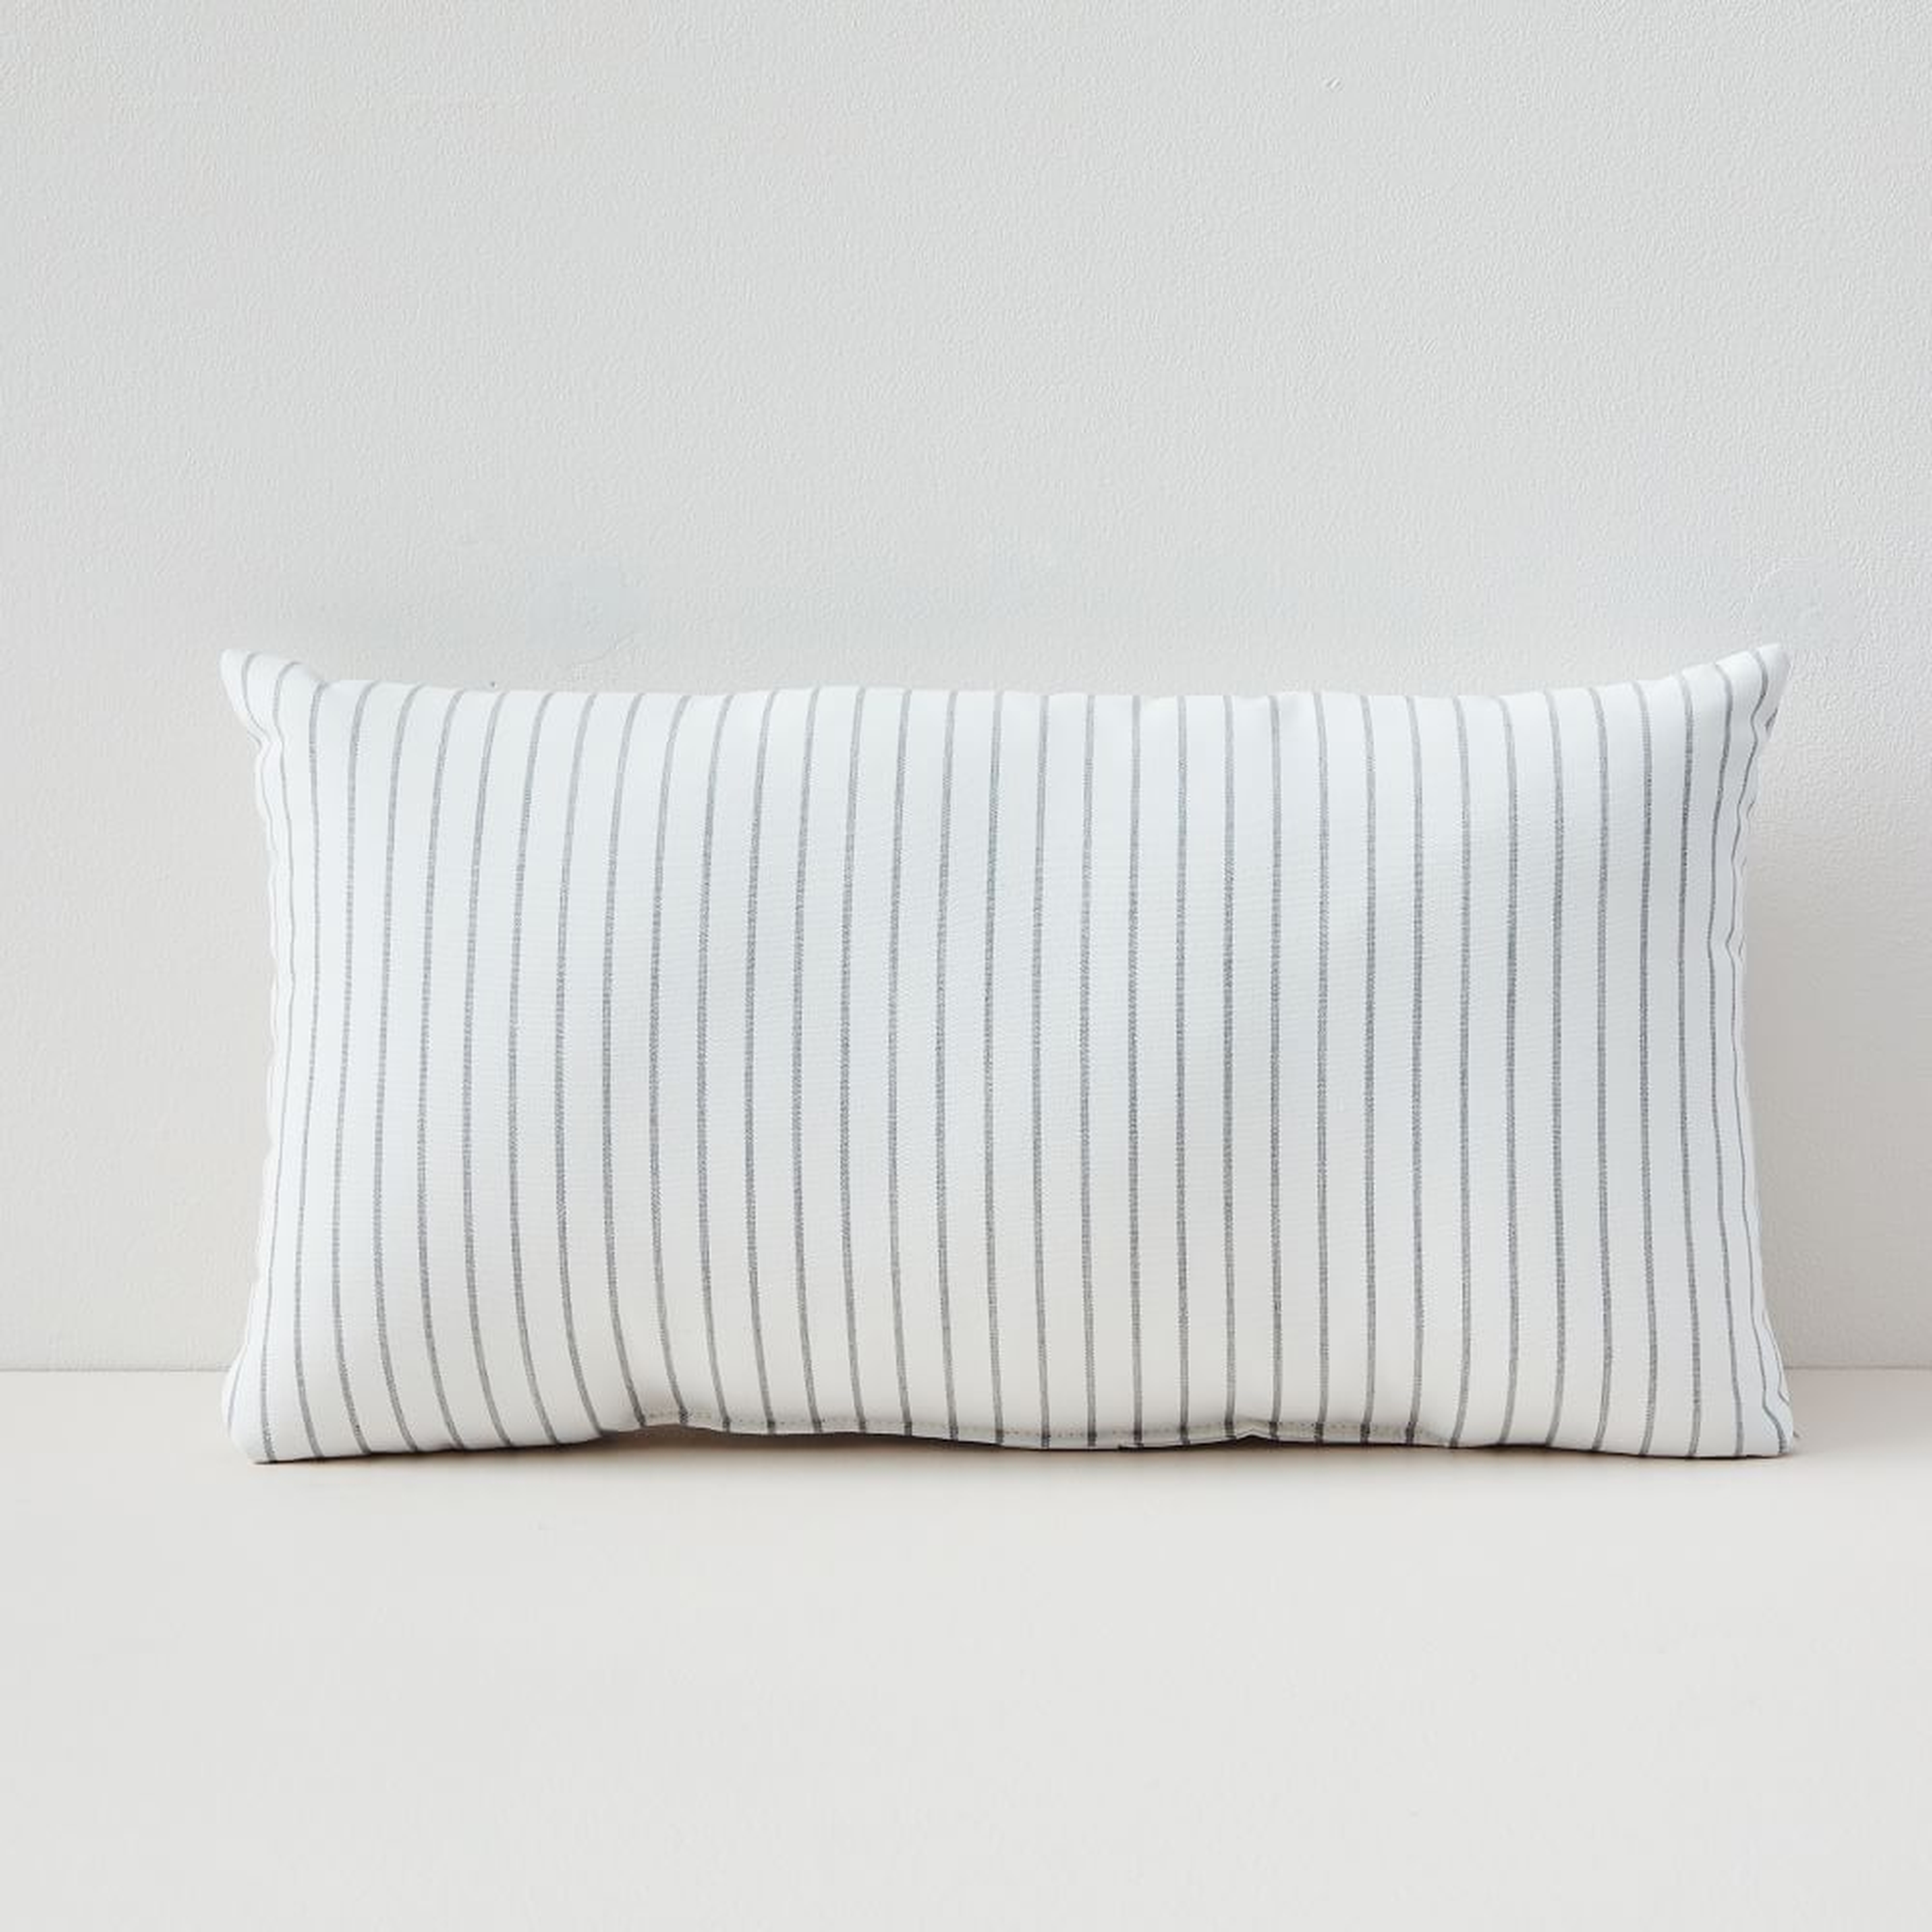 Sunbrella Indoor/Outdoor Striped Lumbar Pillow, Cloud, Set of 2, 12"x21" - West Elm